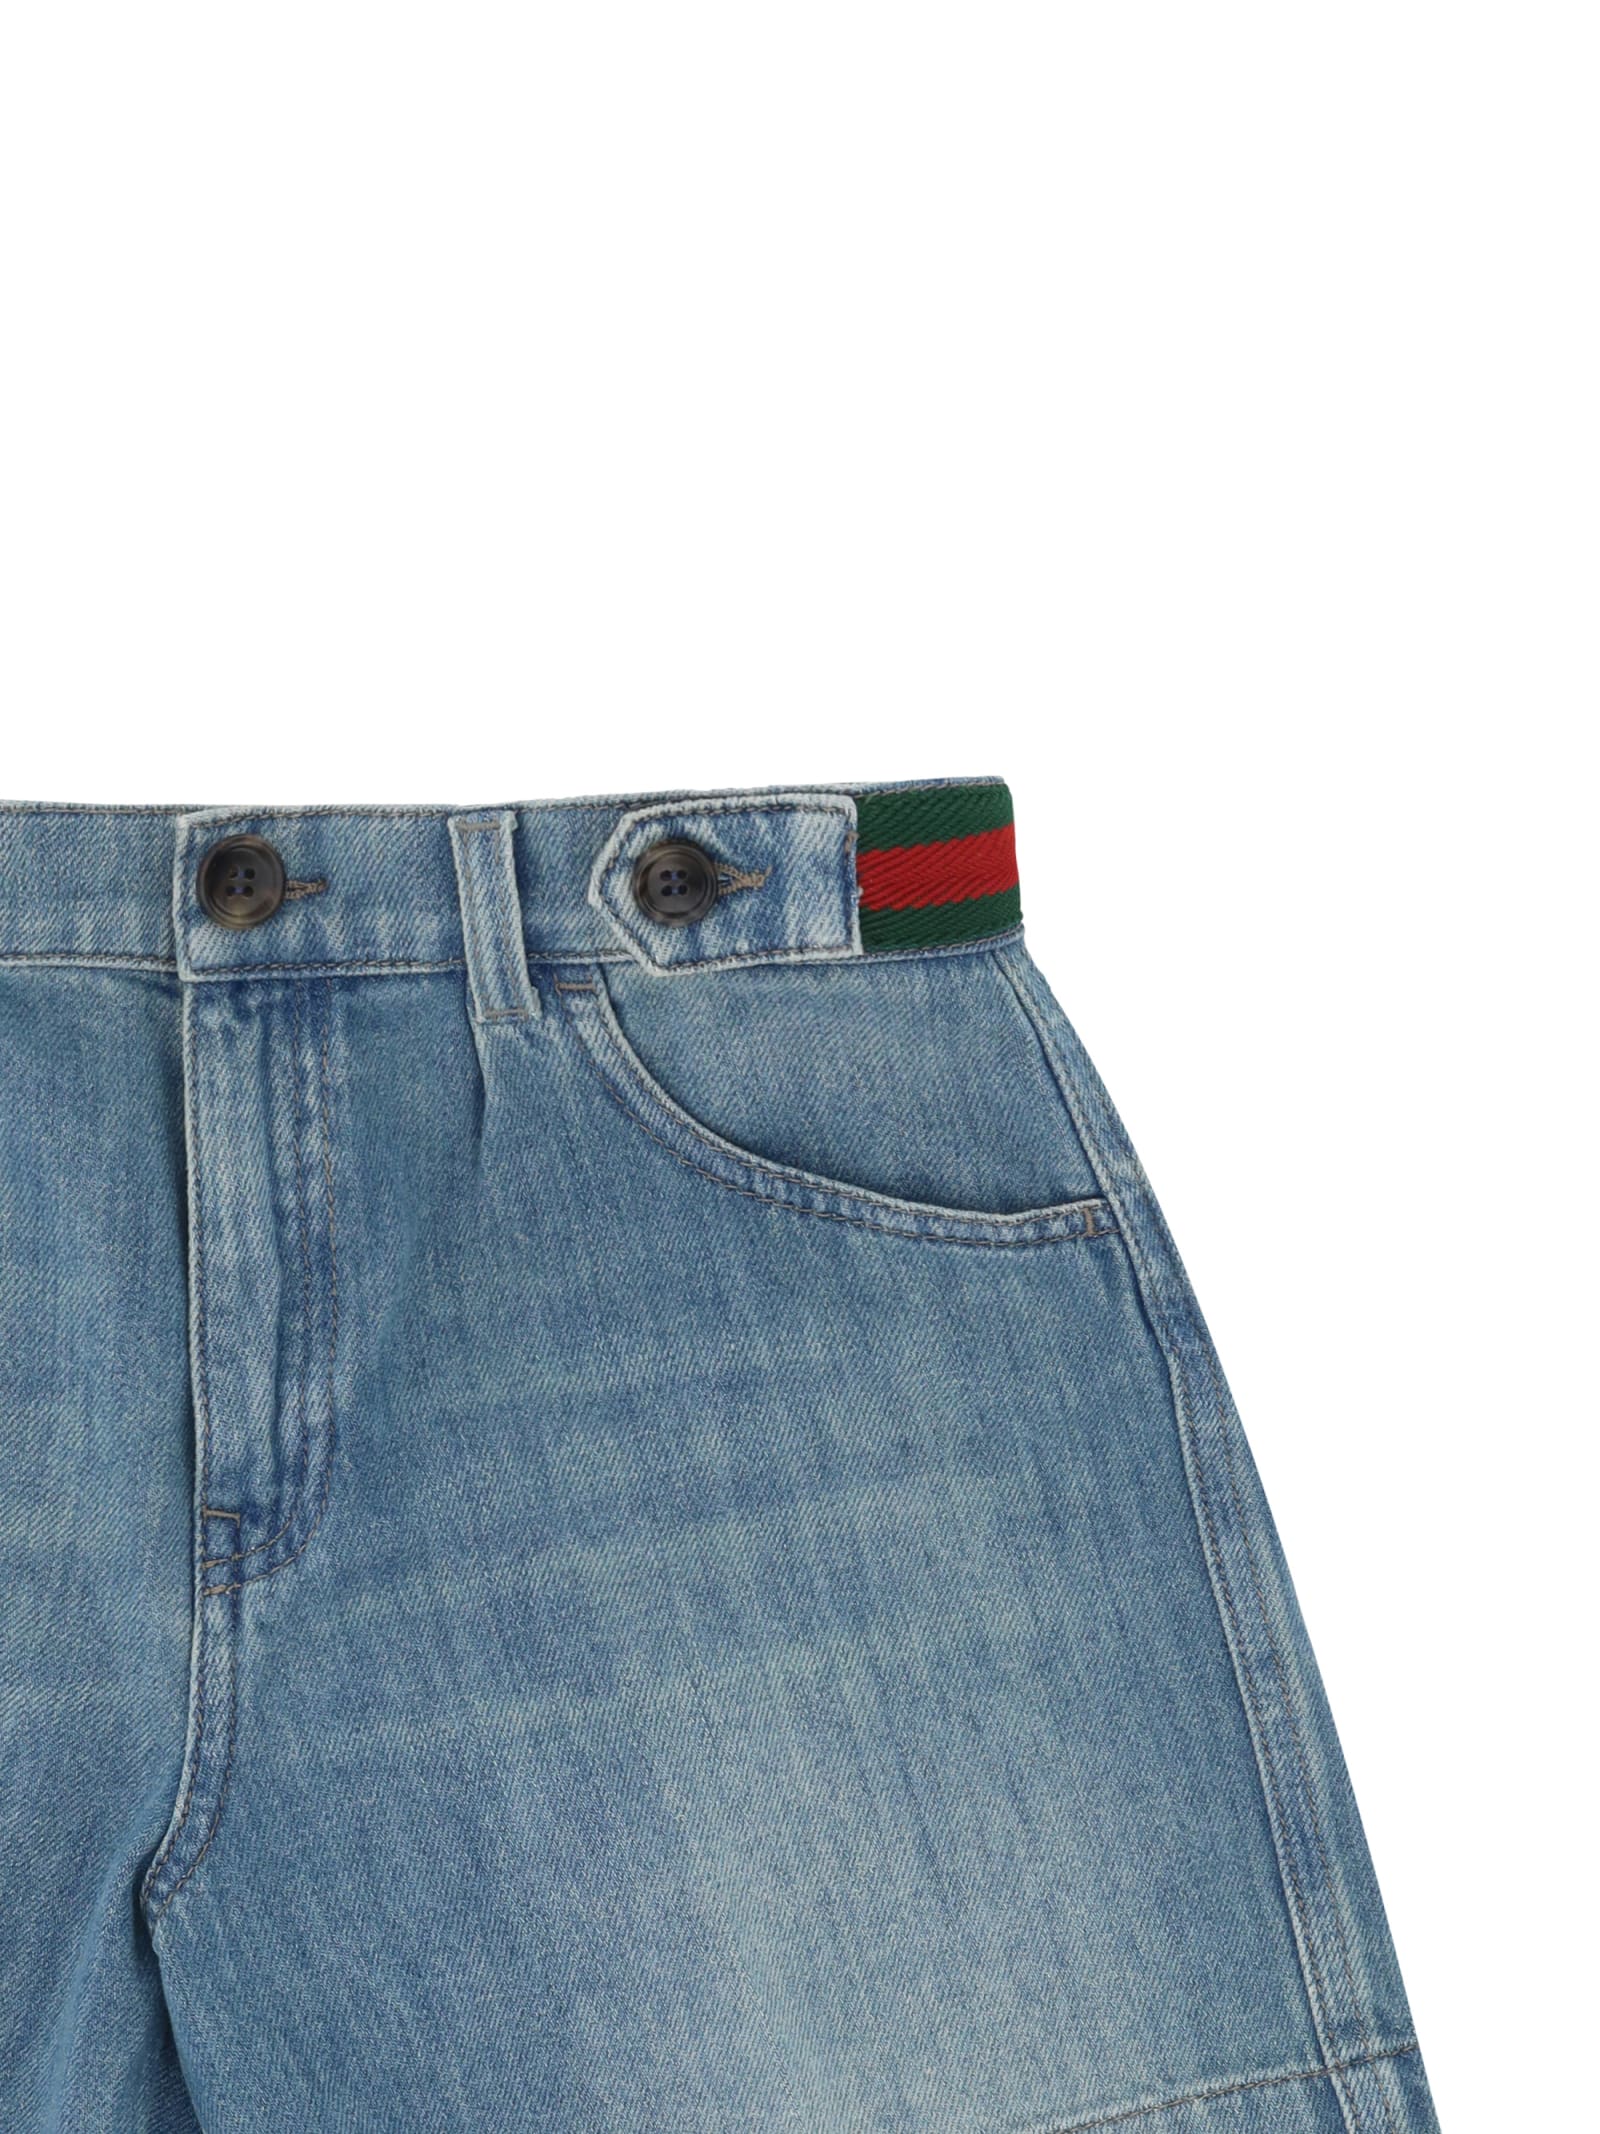 Shop Gucci Bermuda Shorts For Boy